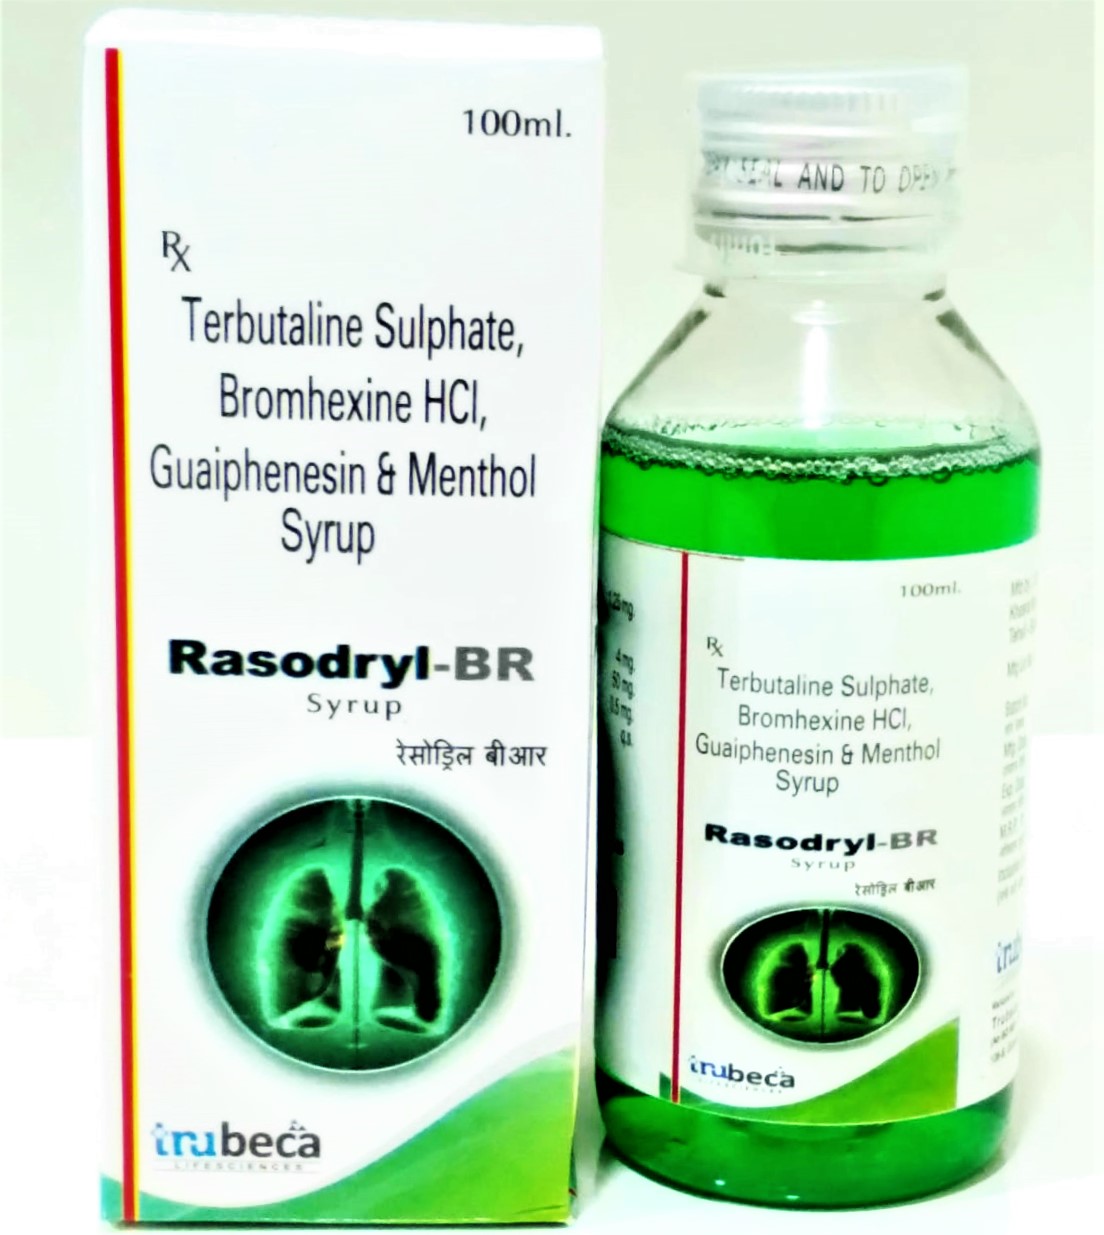 terbutaline sulphate 1.25mg + bromhexine hcl 4mg + guaiphensin 50mg + menthol 1.0mg syrup with monocarton